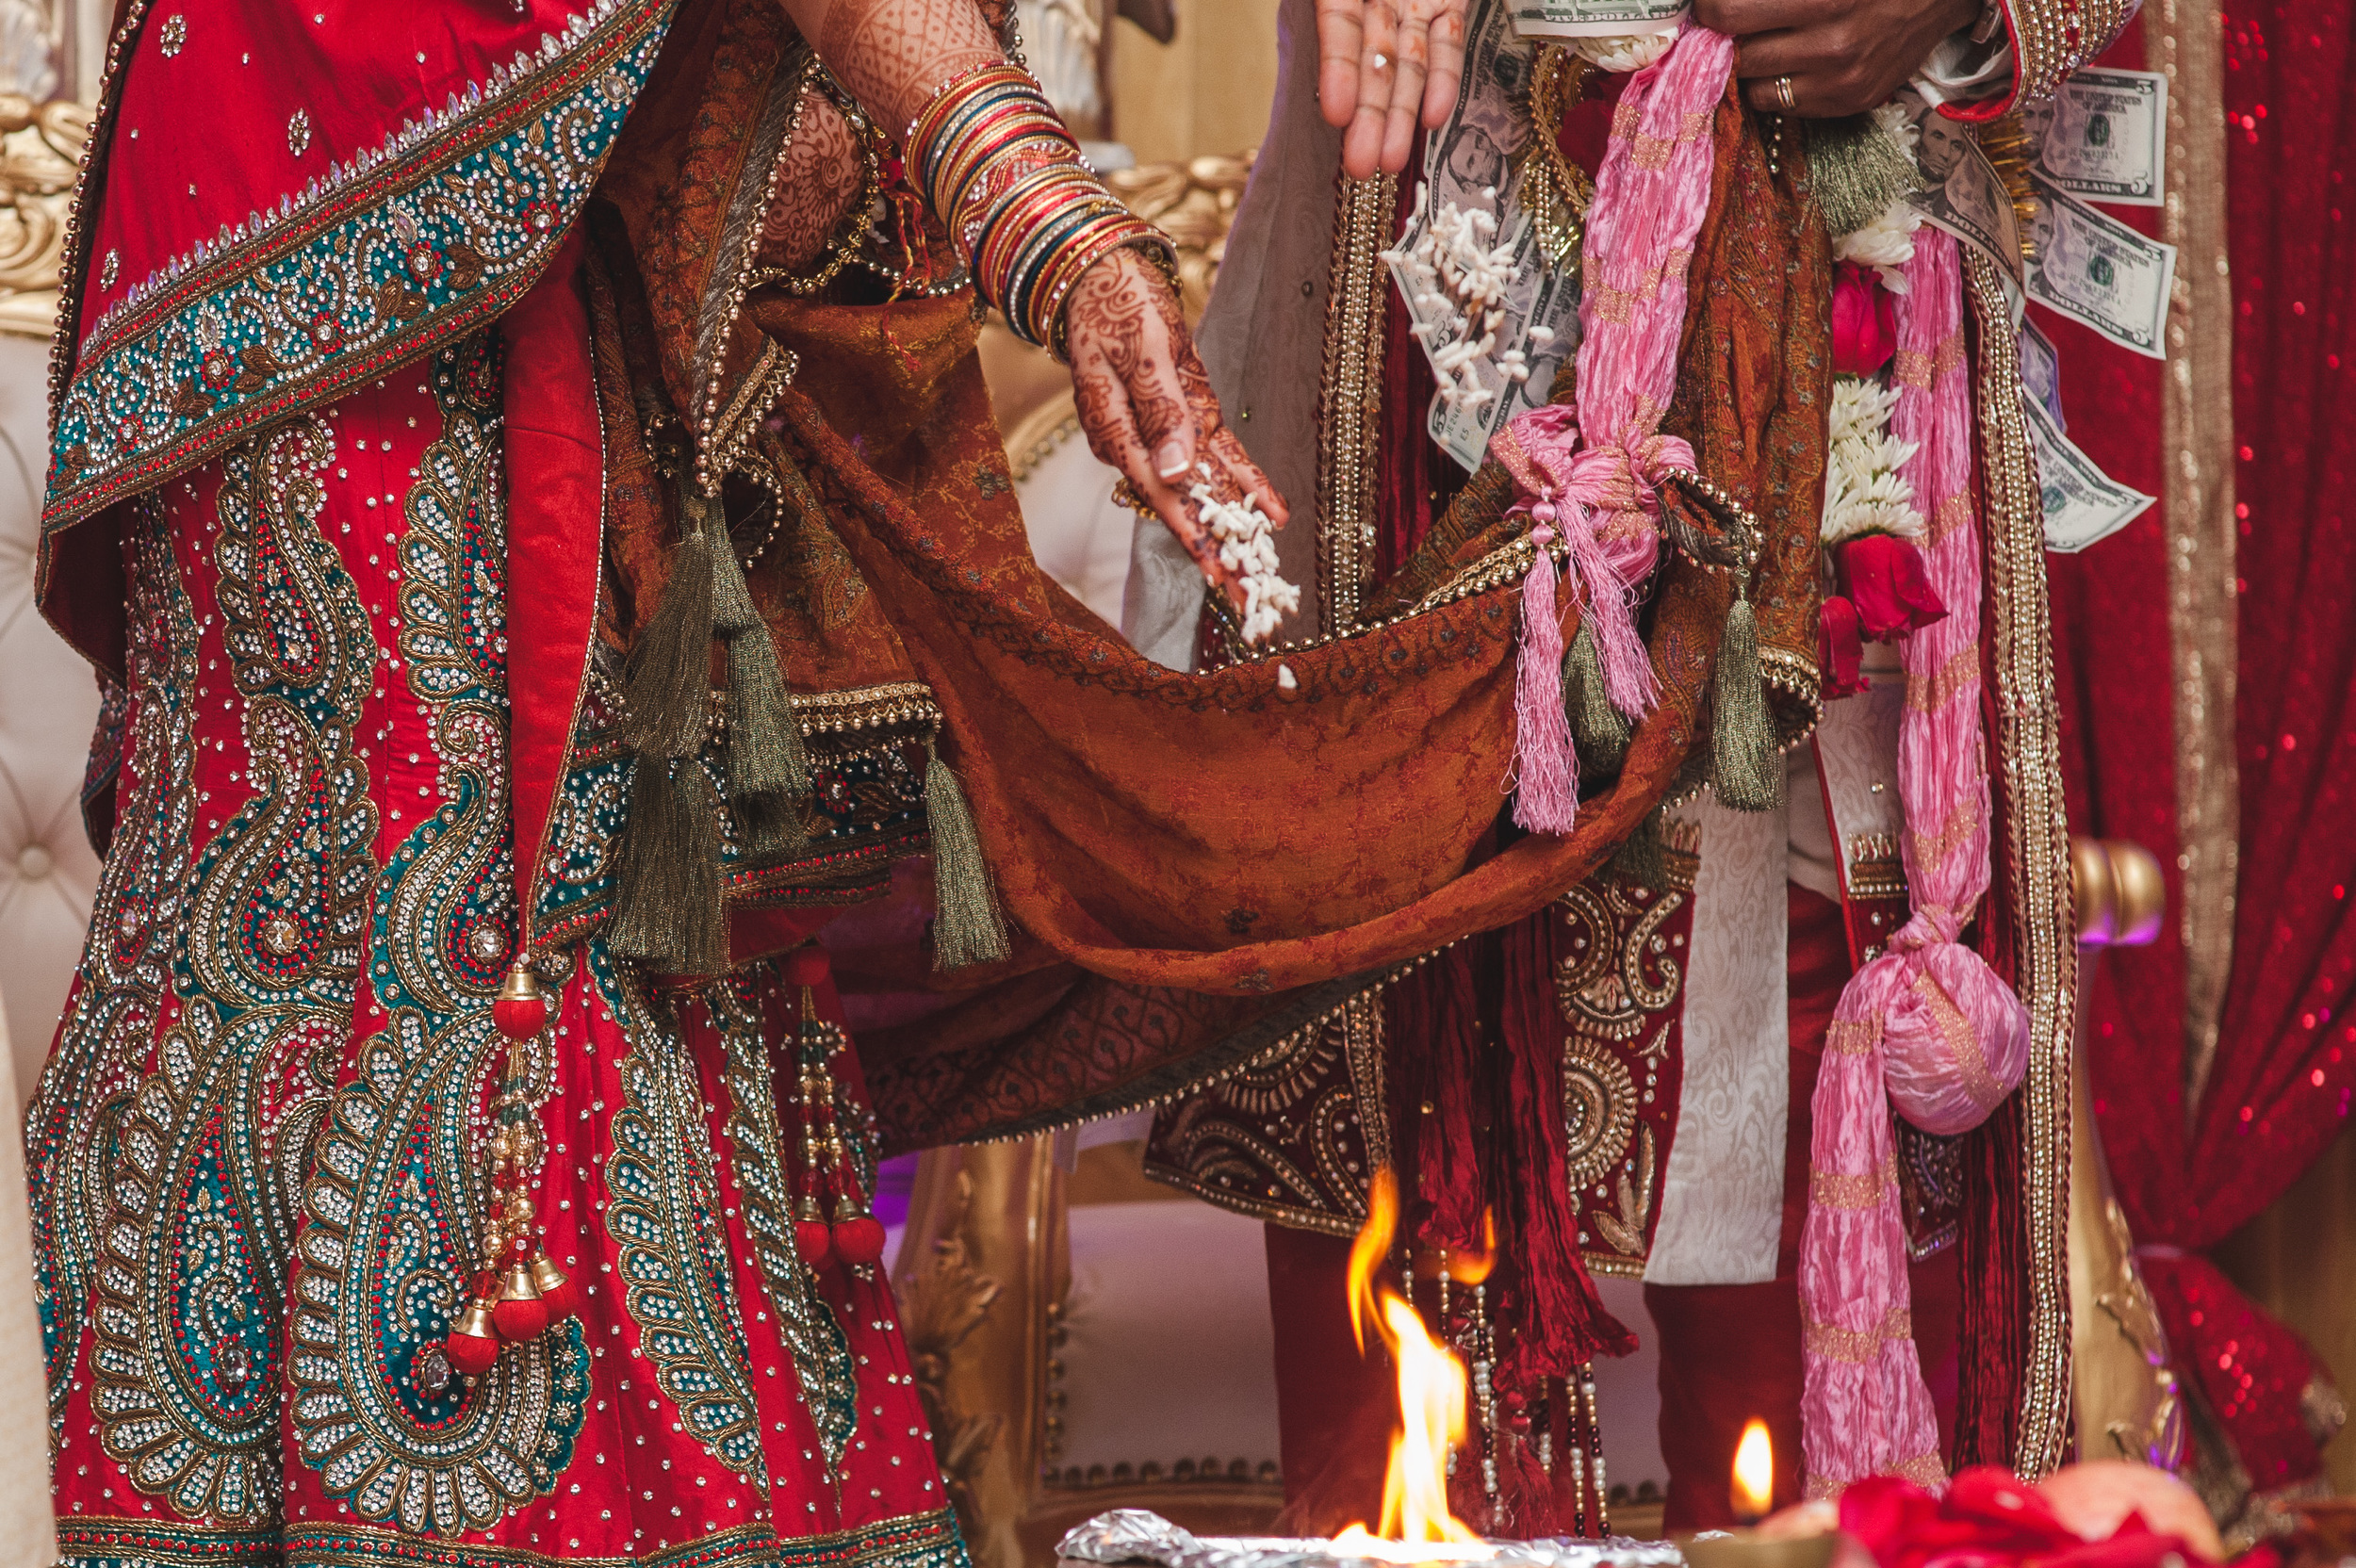 Indian wedding photographer washington dc Mantas Kubilinskas-31.jpg